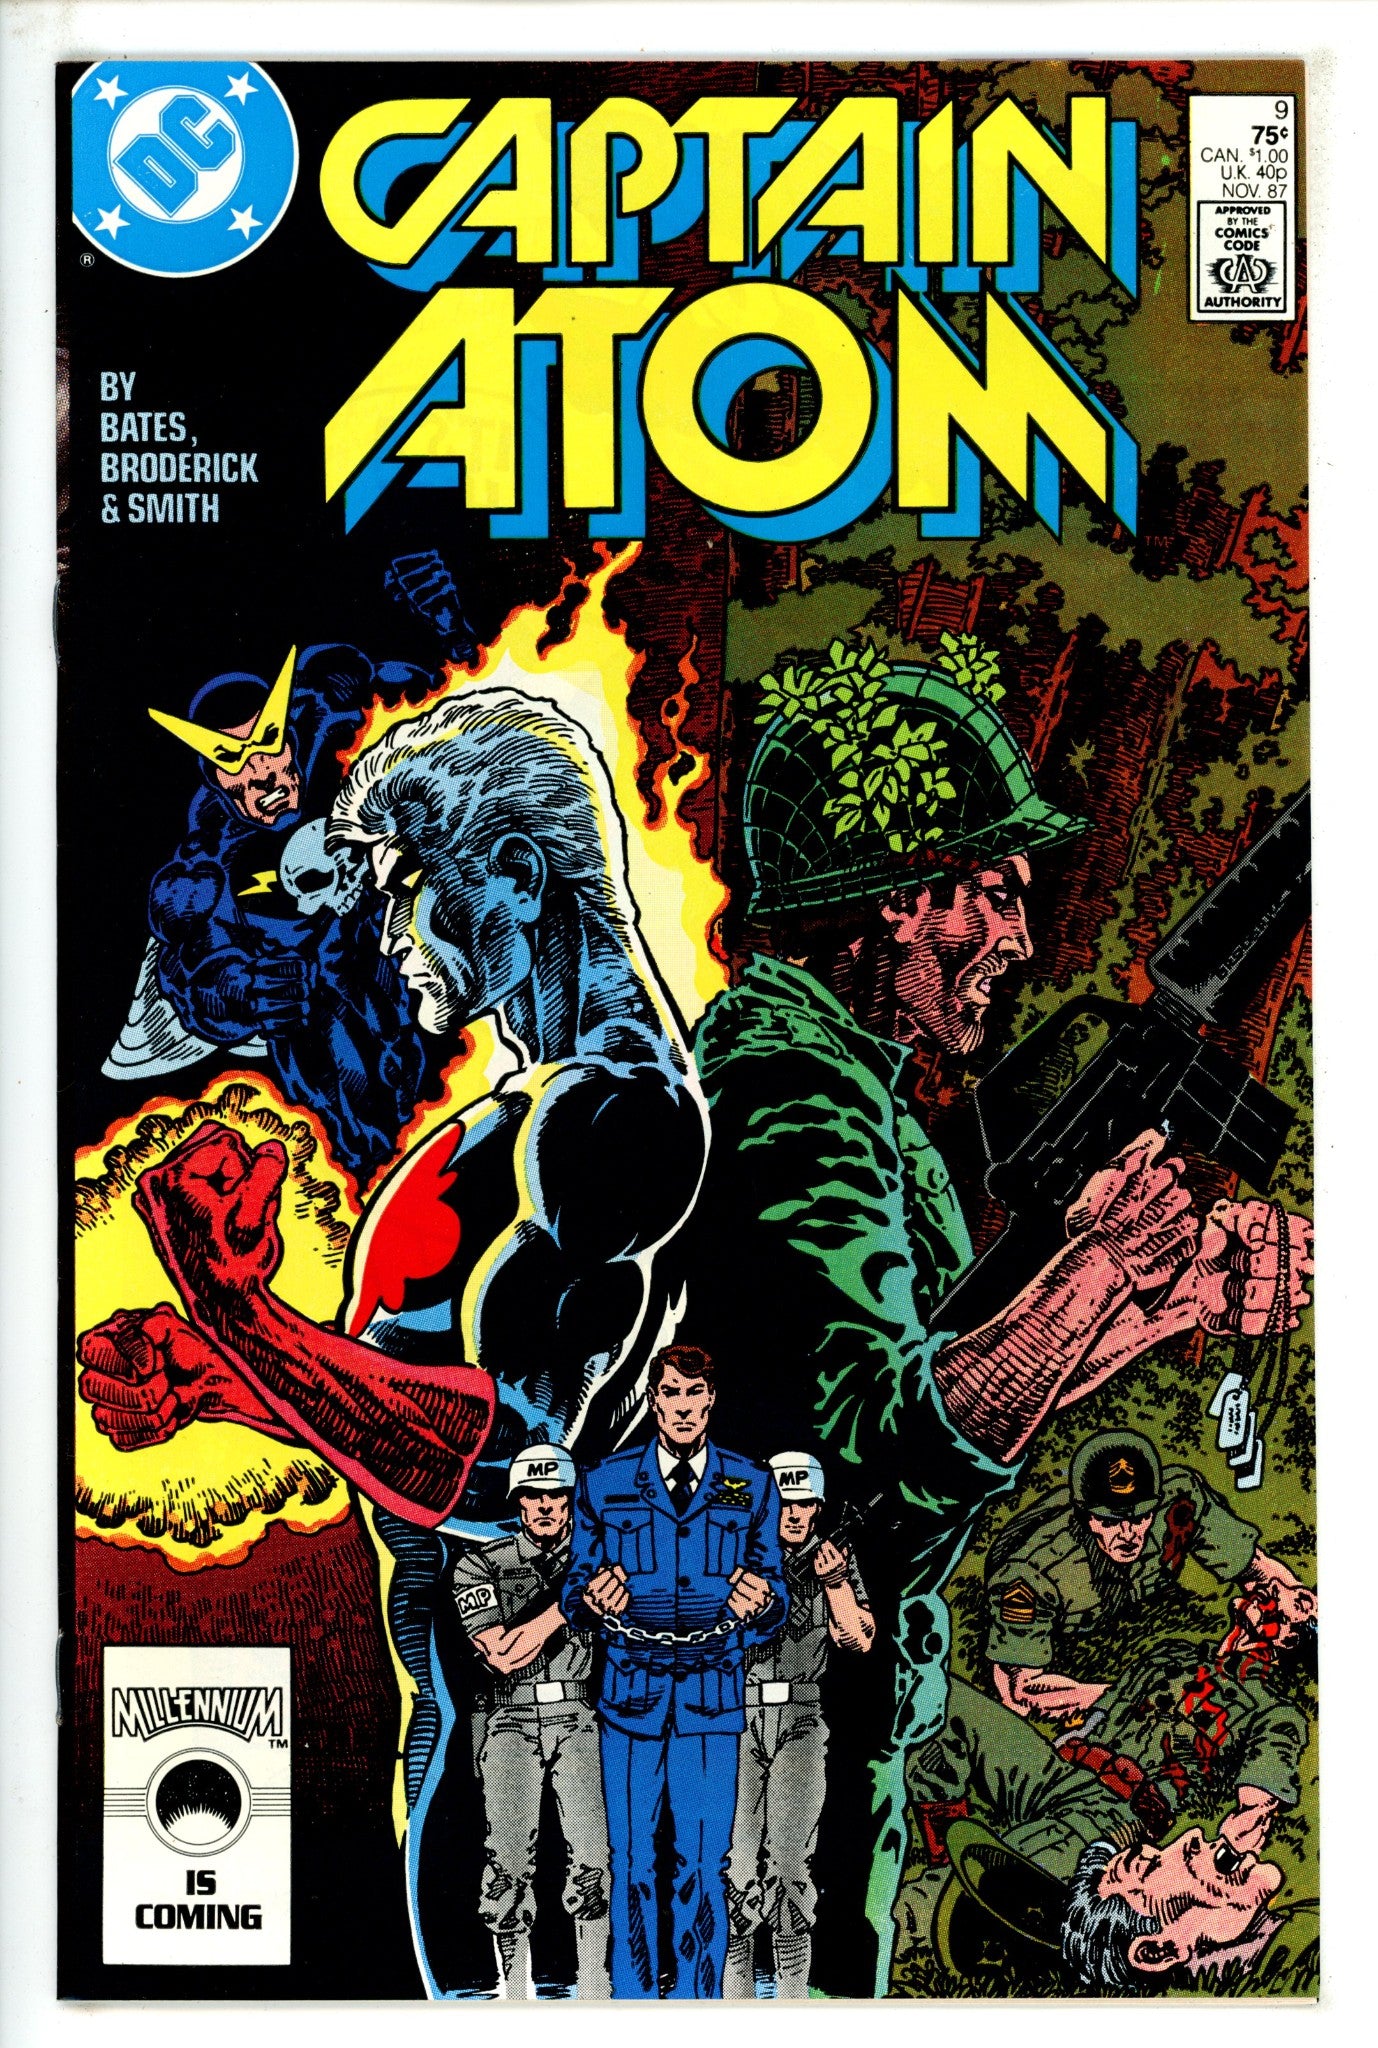 Captain Atom Vol 3 9 (1987)